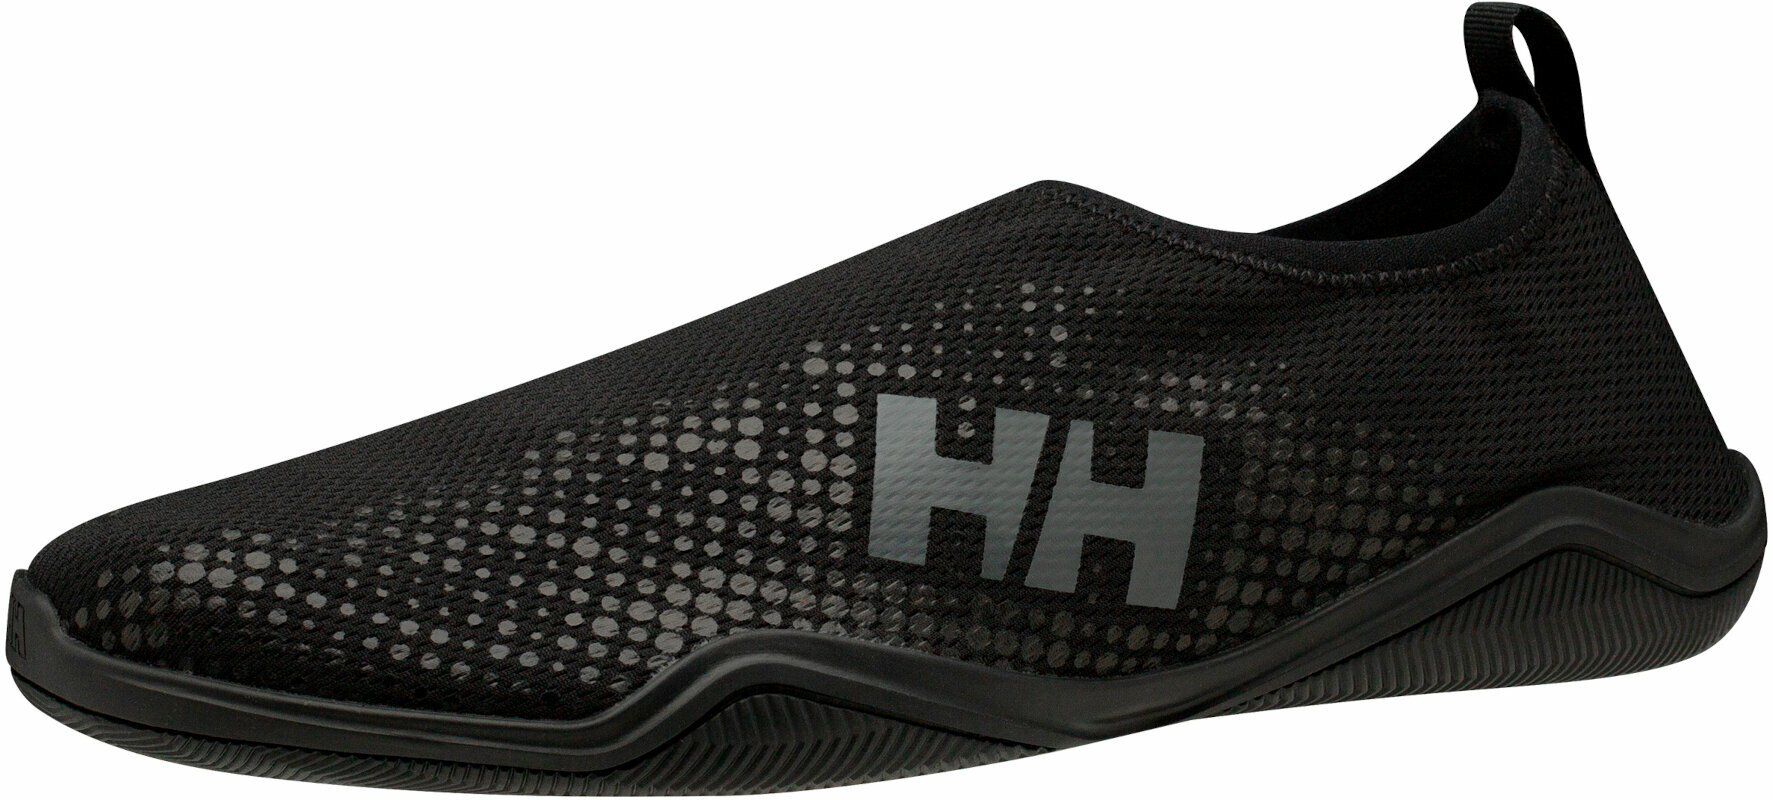 Herrenschuhe Helly Hansen Men's Crest Watermoc Black/Charcoal 41